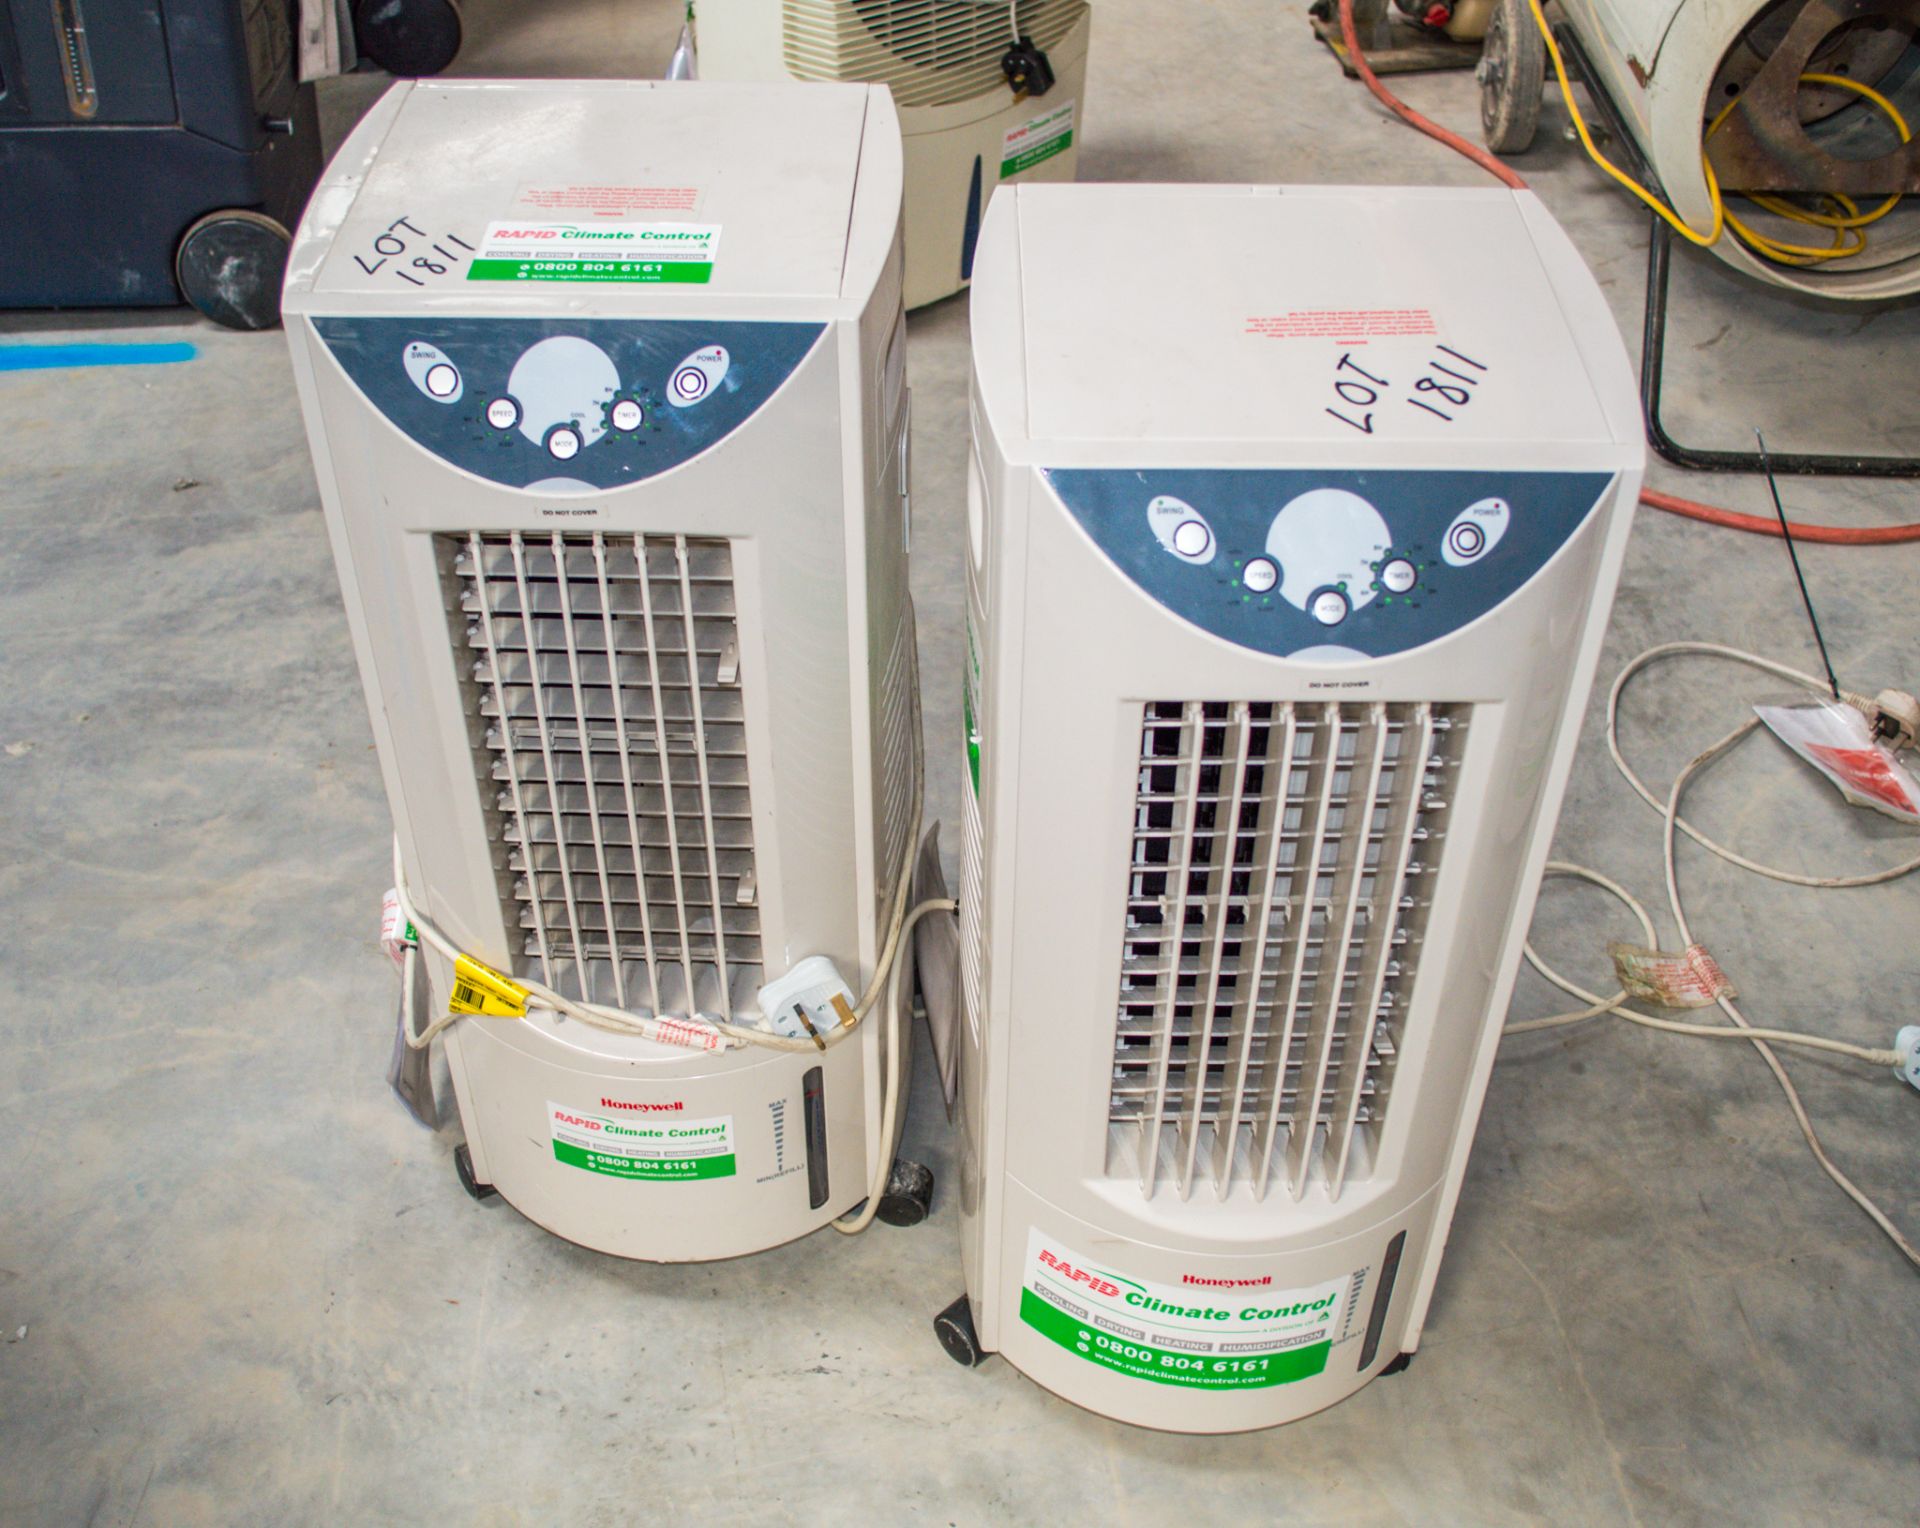 2 - Honeywell 240v evaporative coolers 20199002/20199003